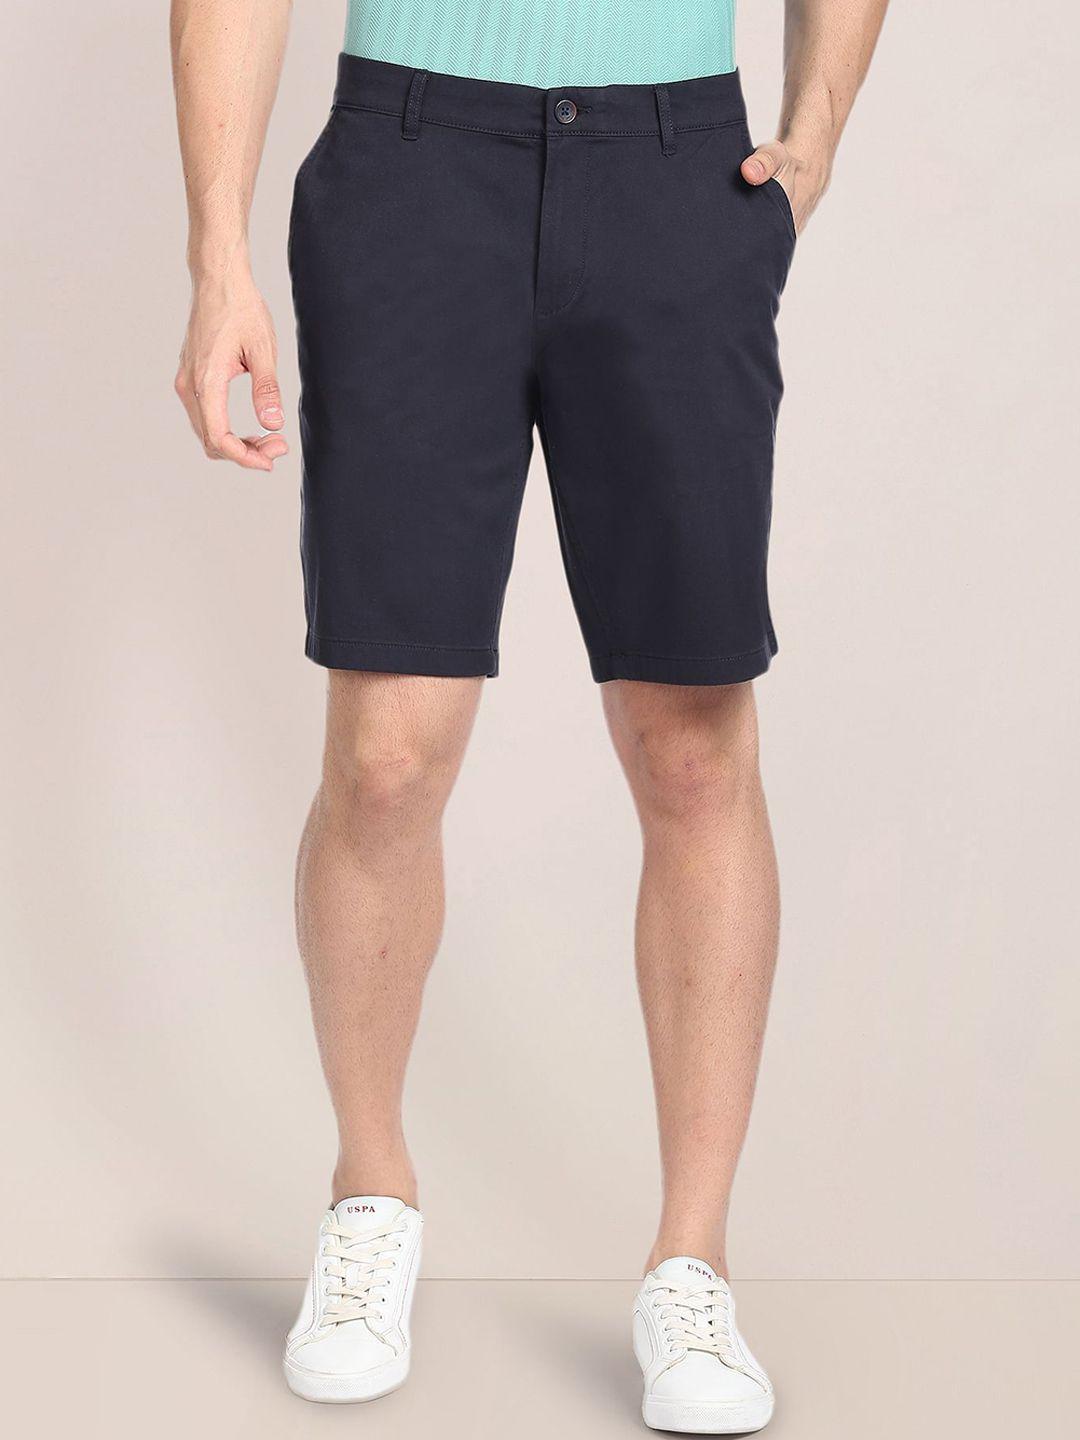 U.S. Polo Assn. Men Mid-Rise Slim Fit Shorts